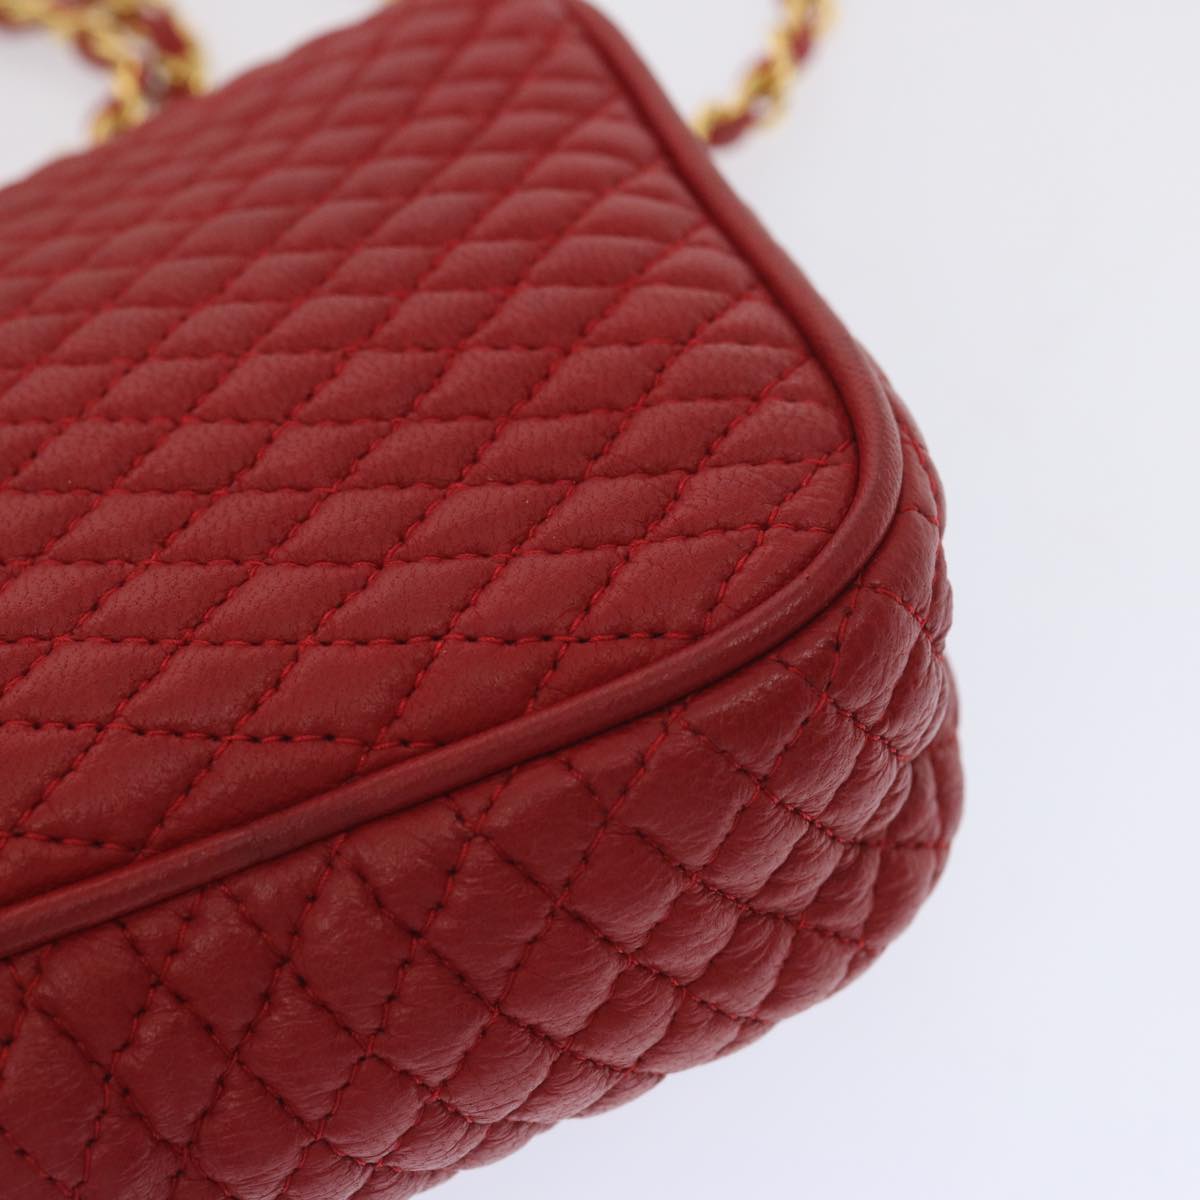 BALLY Matelasse Chain Shoulder Bag Leather Red Auth ki4189